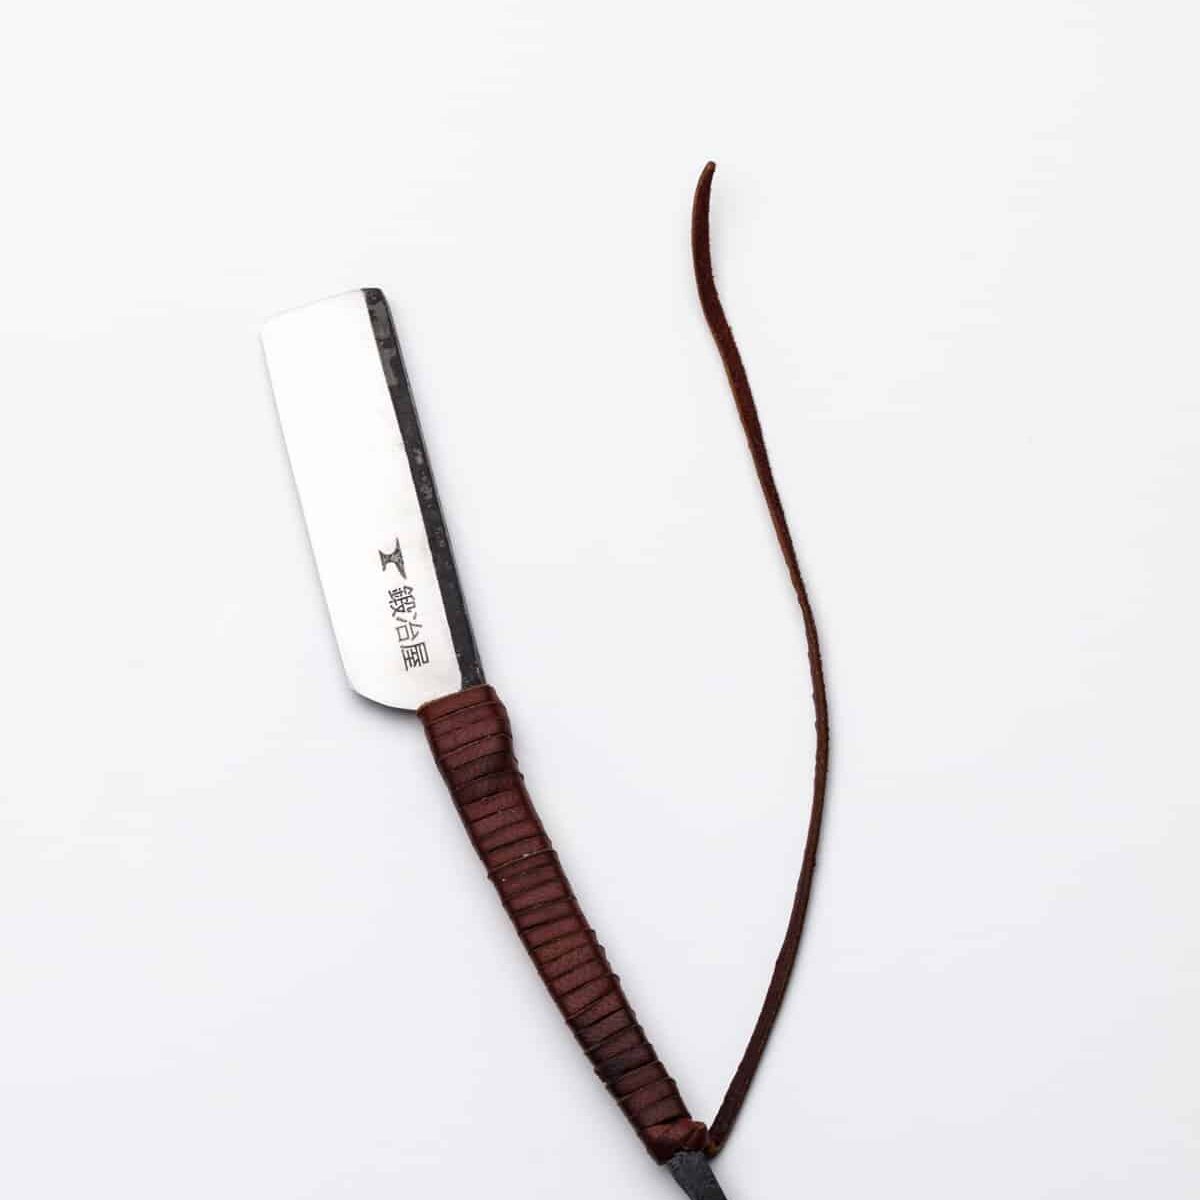 Kamisori Straight Razor - Shave Ready, curved handle